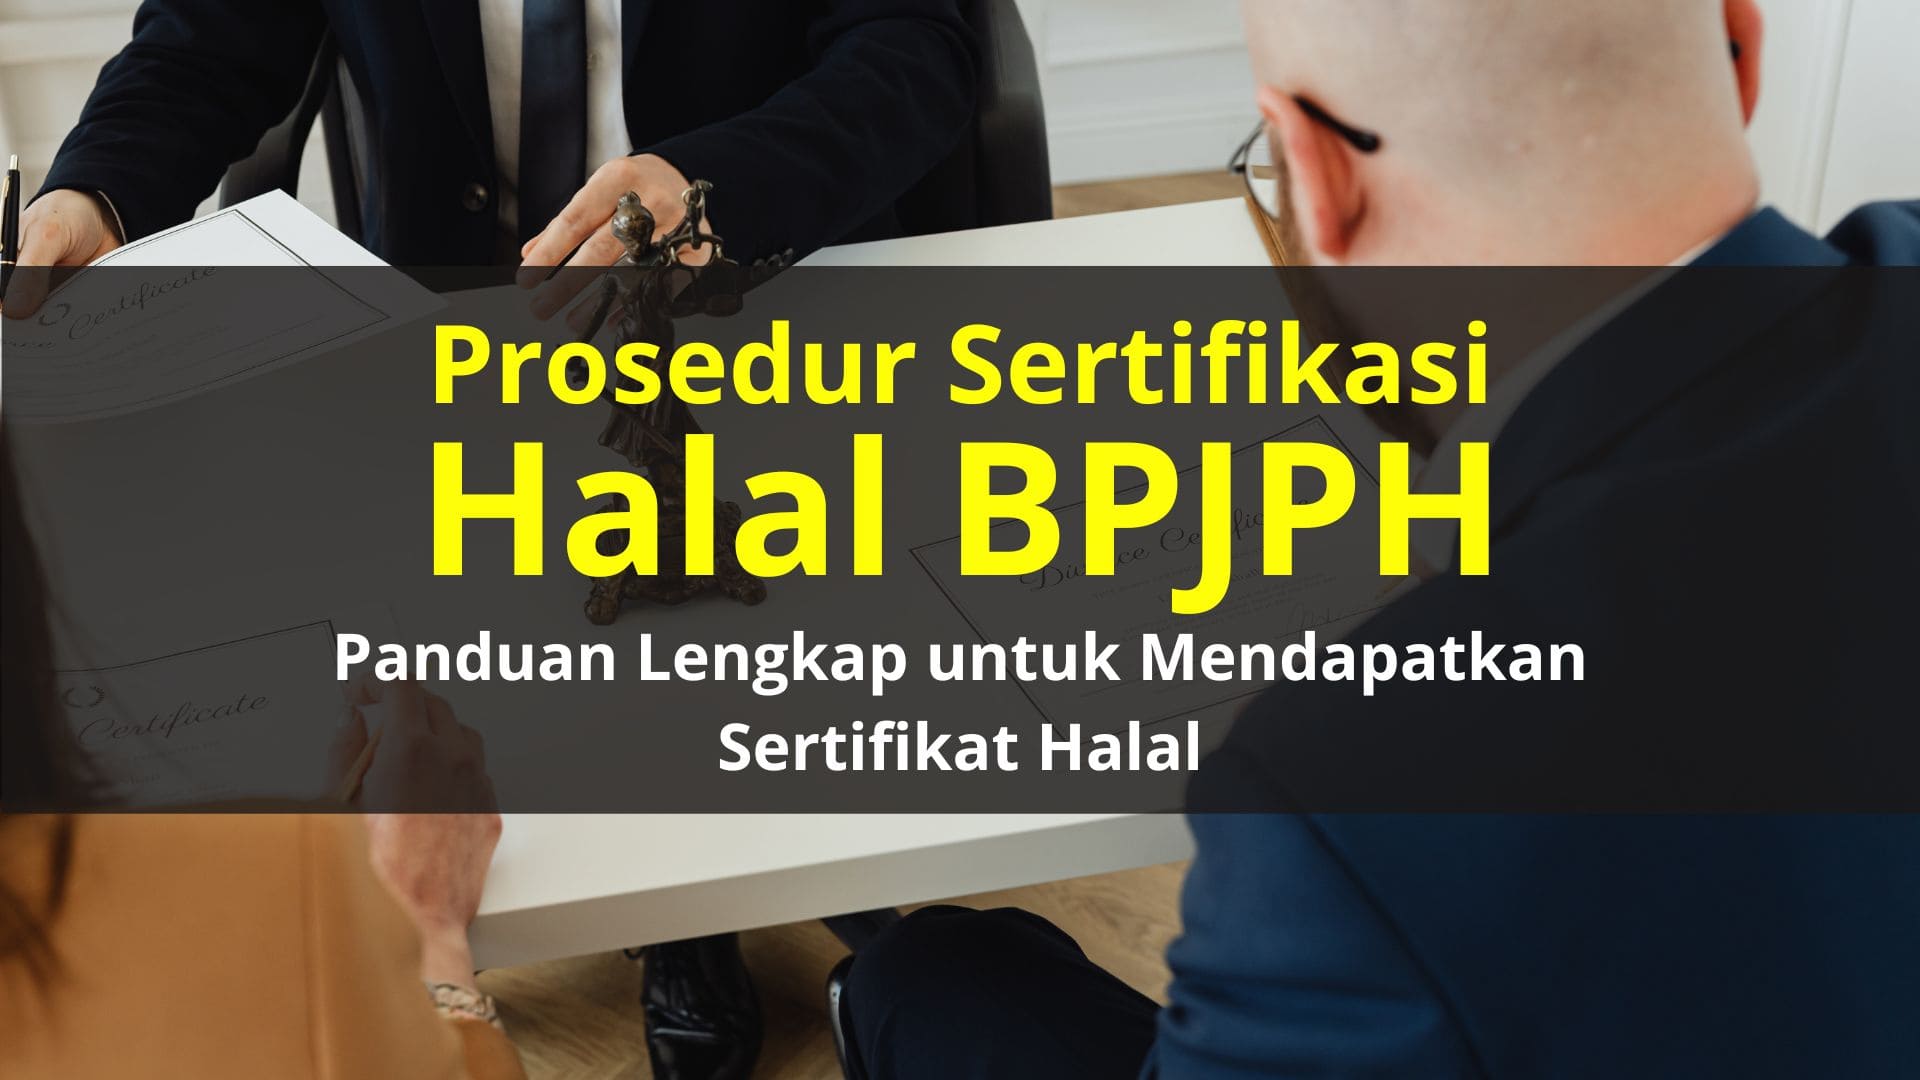 Prosedur Sertifikasi Halal BPJPH: Panduan Lengkap untuk Mendapatkan Sertifikat Halal